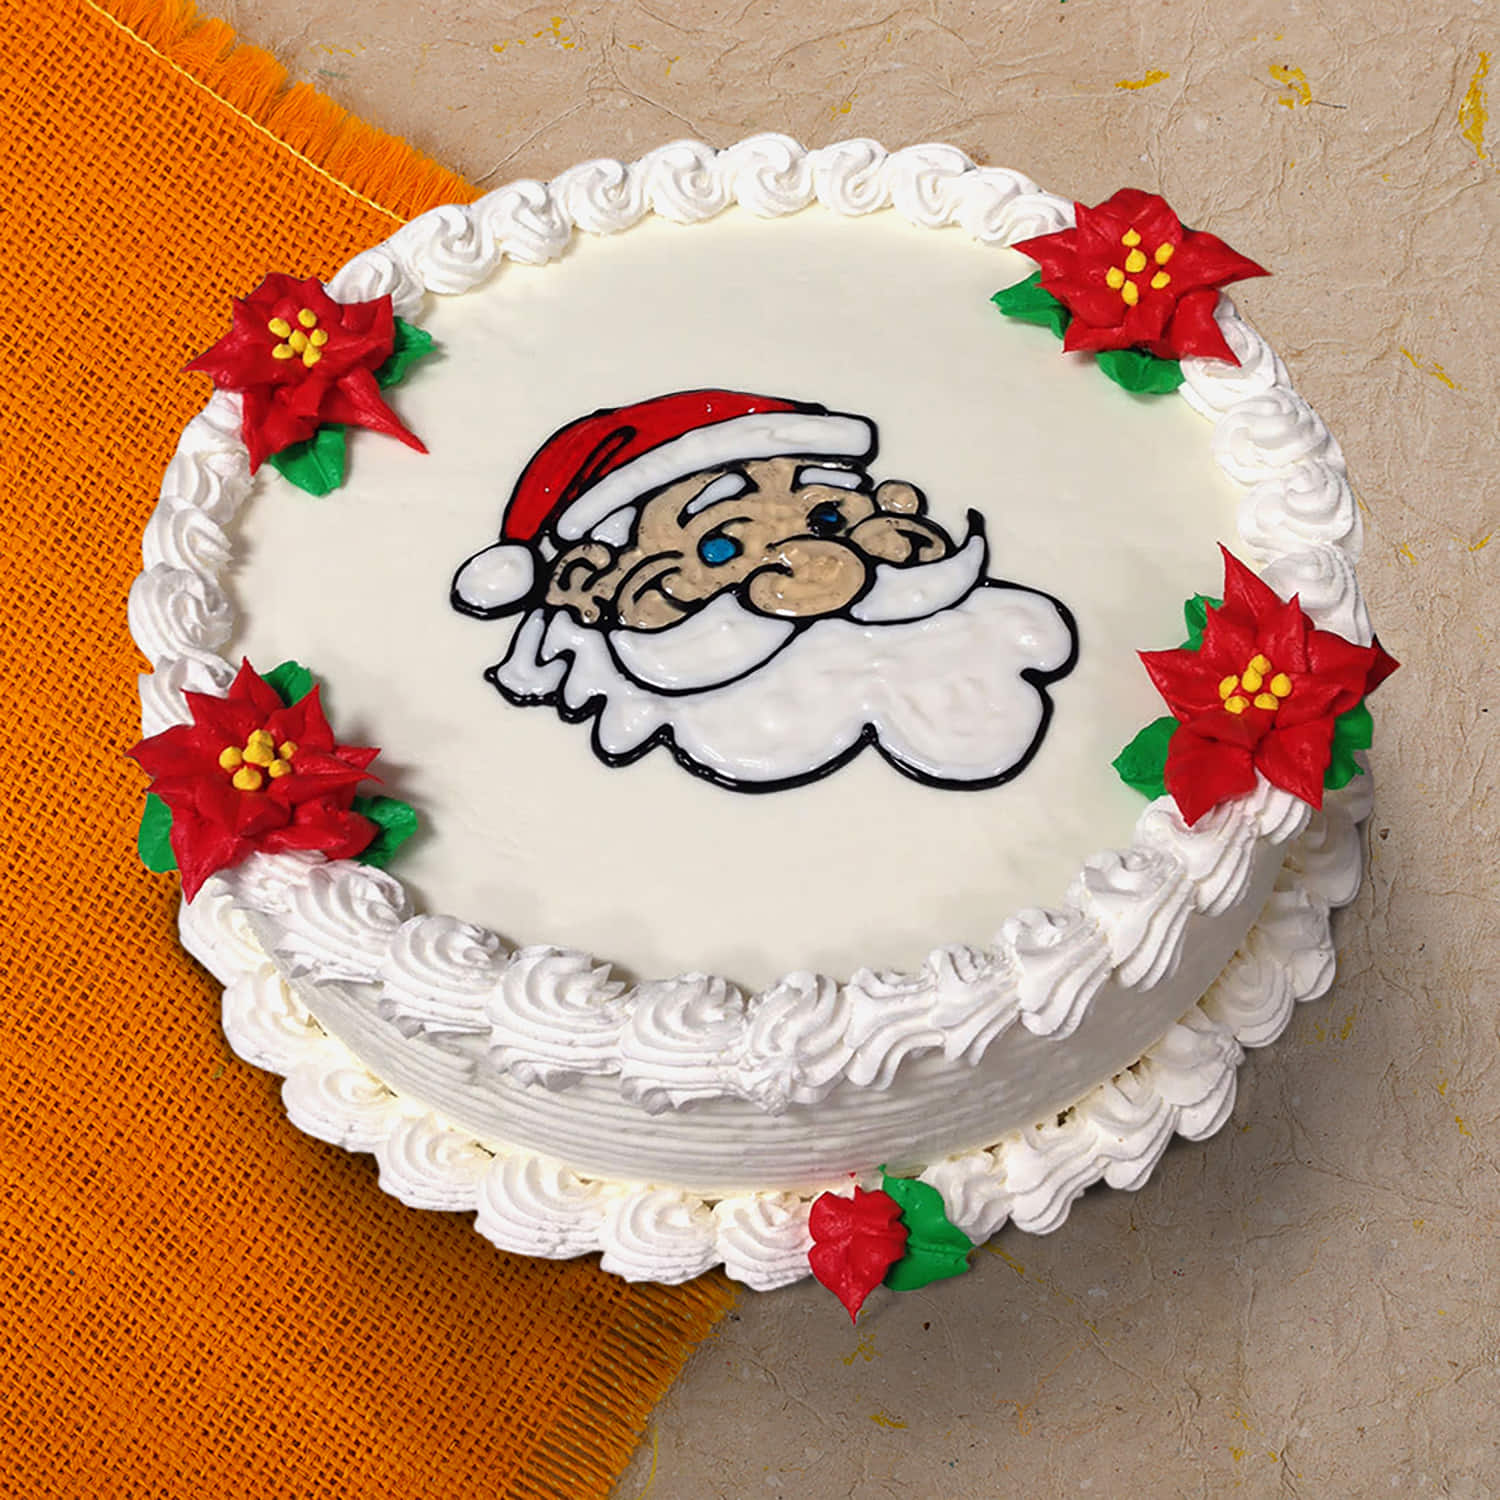 Christmas Cakes Online | Send Christmas Santa Cake on Christmas -  Indiagift.in